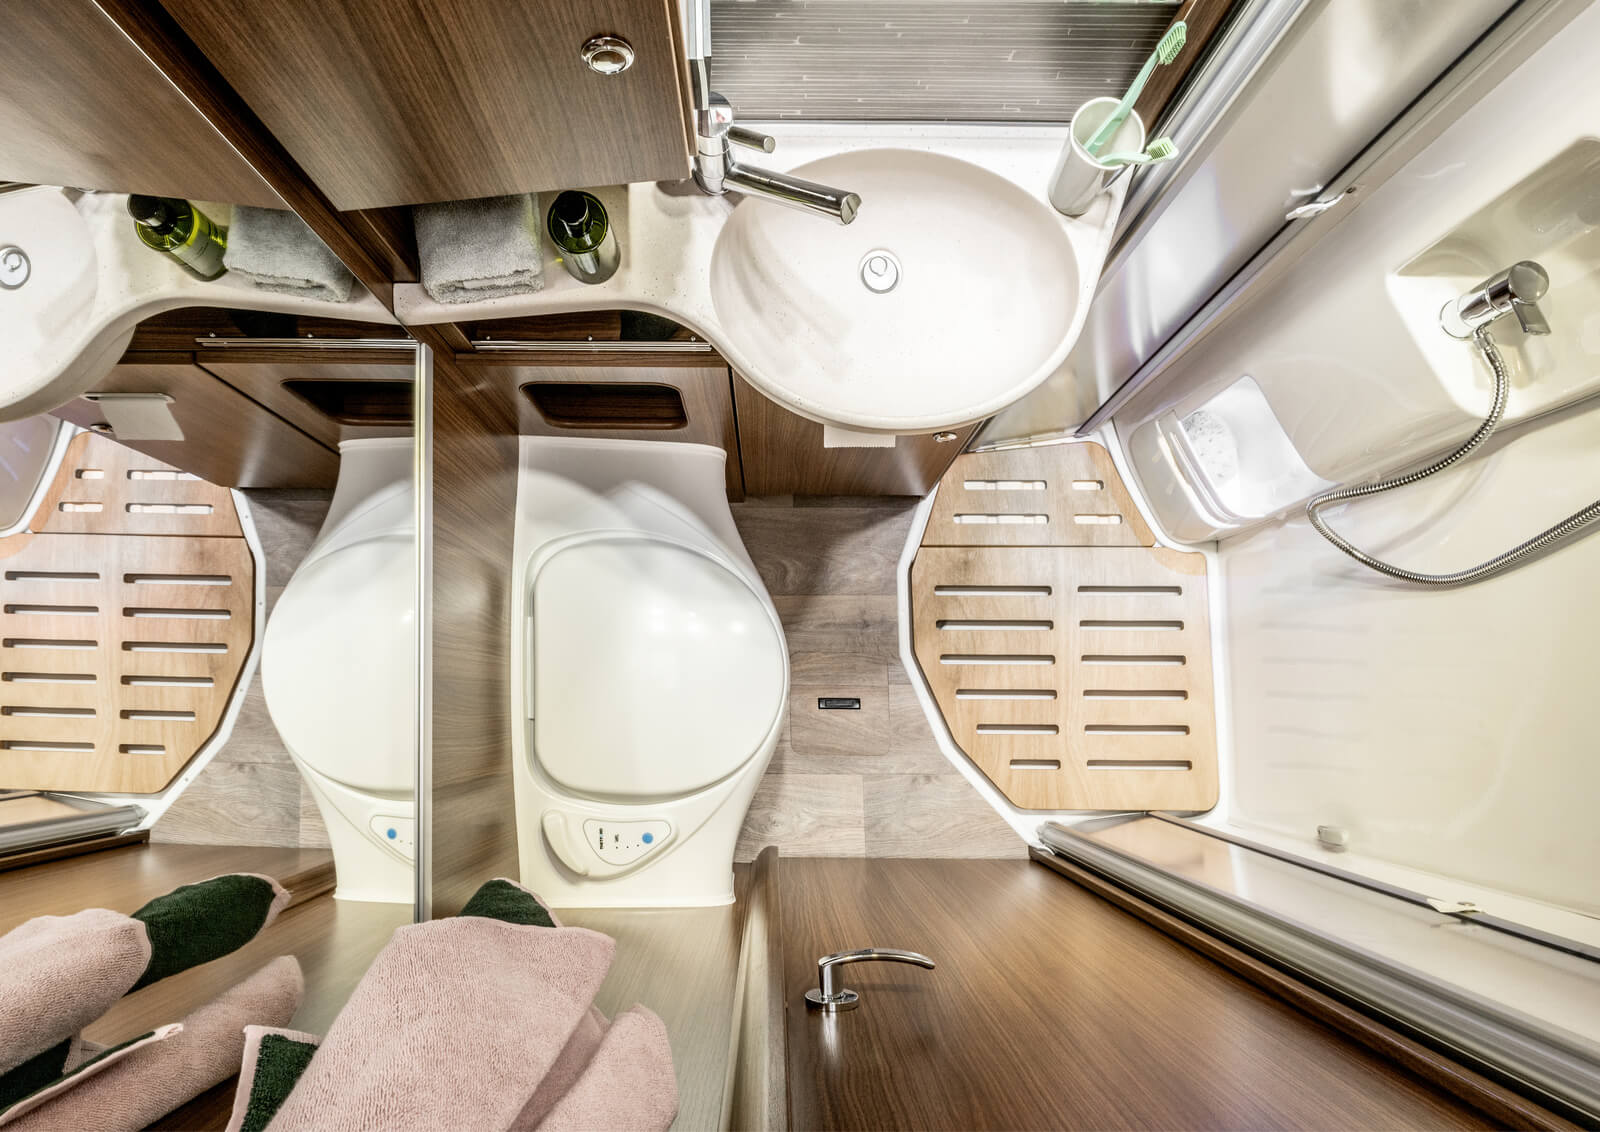 Wilderness 2022 Hymer ML-T-580 motorhome interior toilet and bath